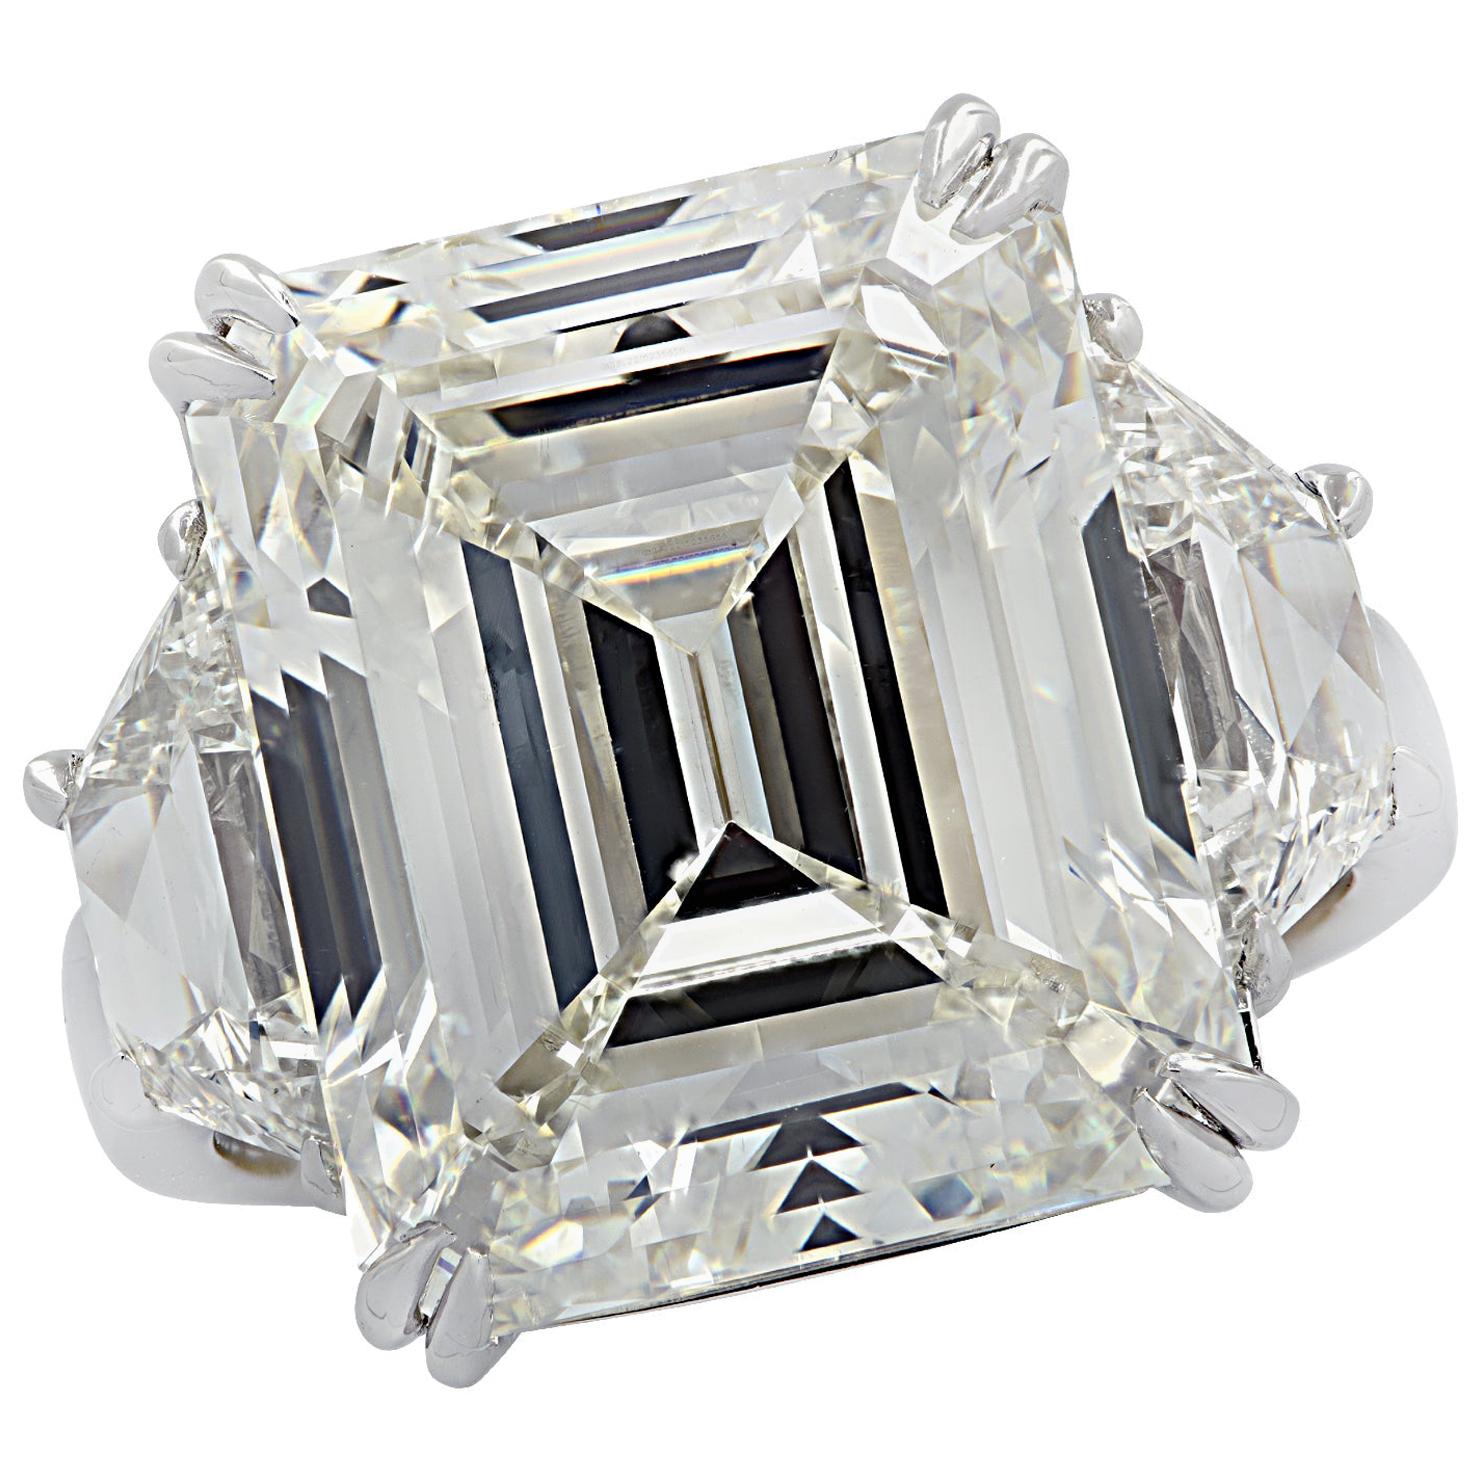 Vivid Diamonds GIA Certified 14.11 Carat Emerald Cut Diamond Engagement Ring